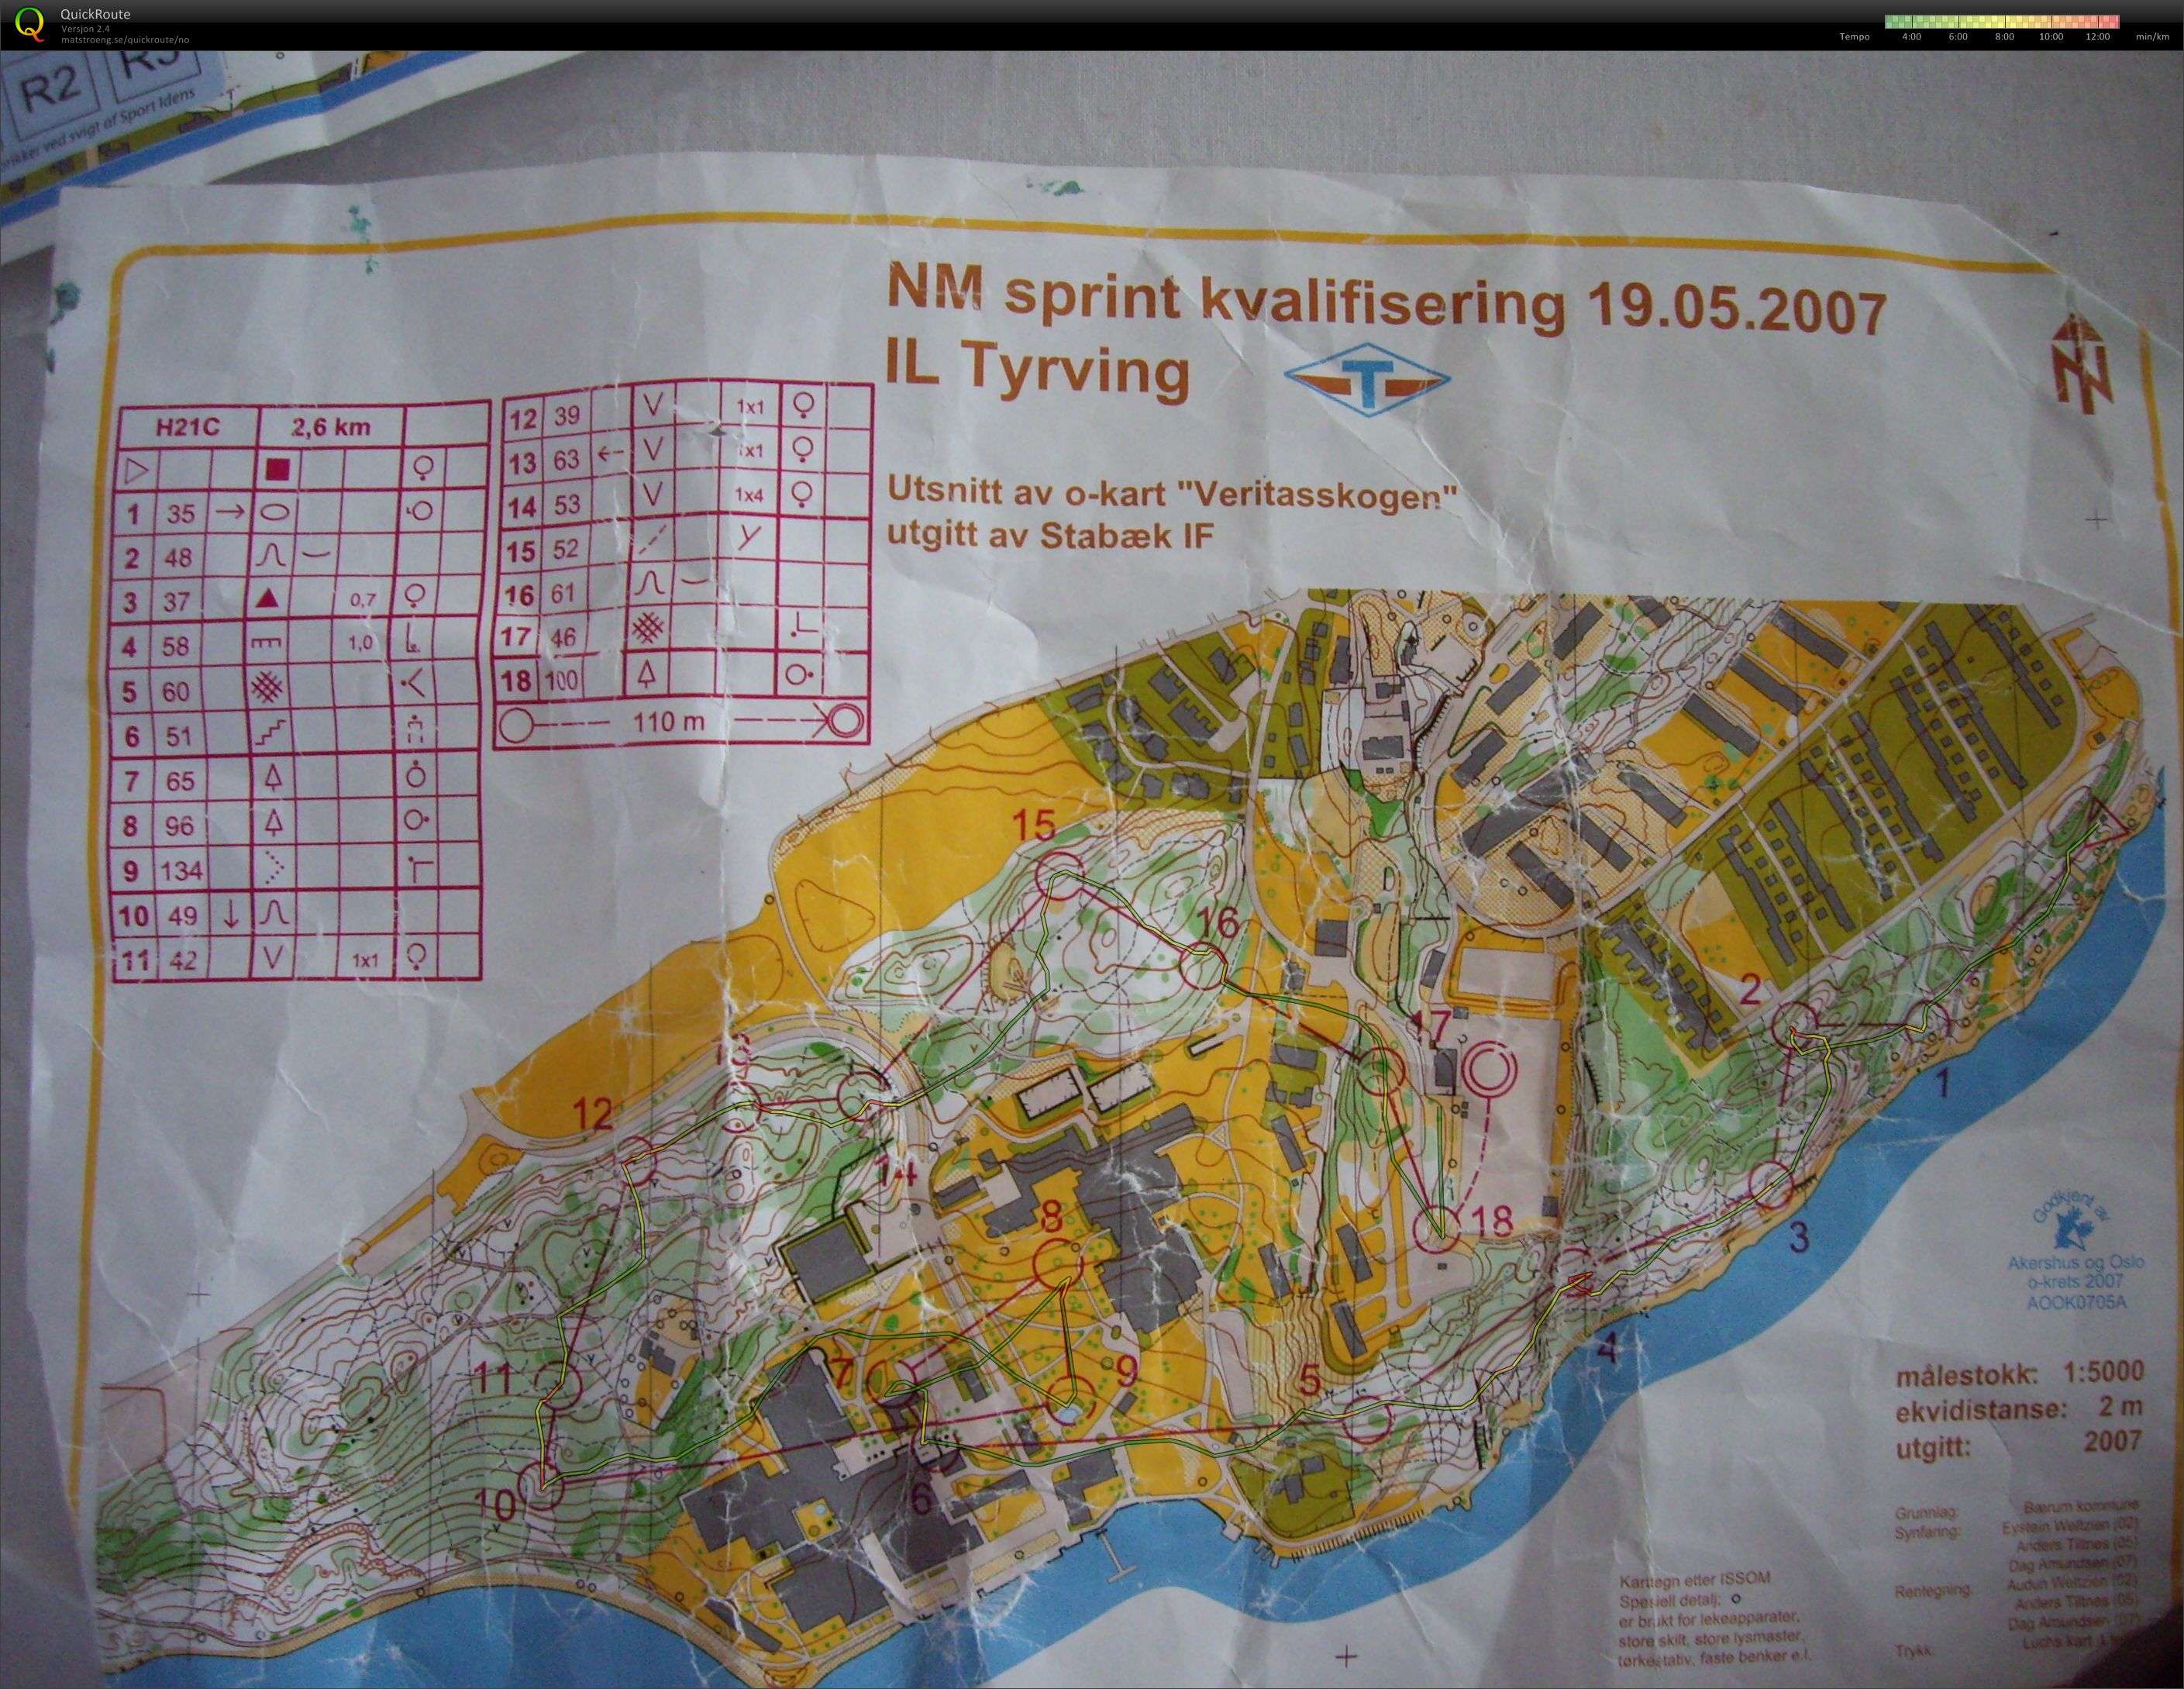 NM sprint kval 2007 (08.04.2012)